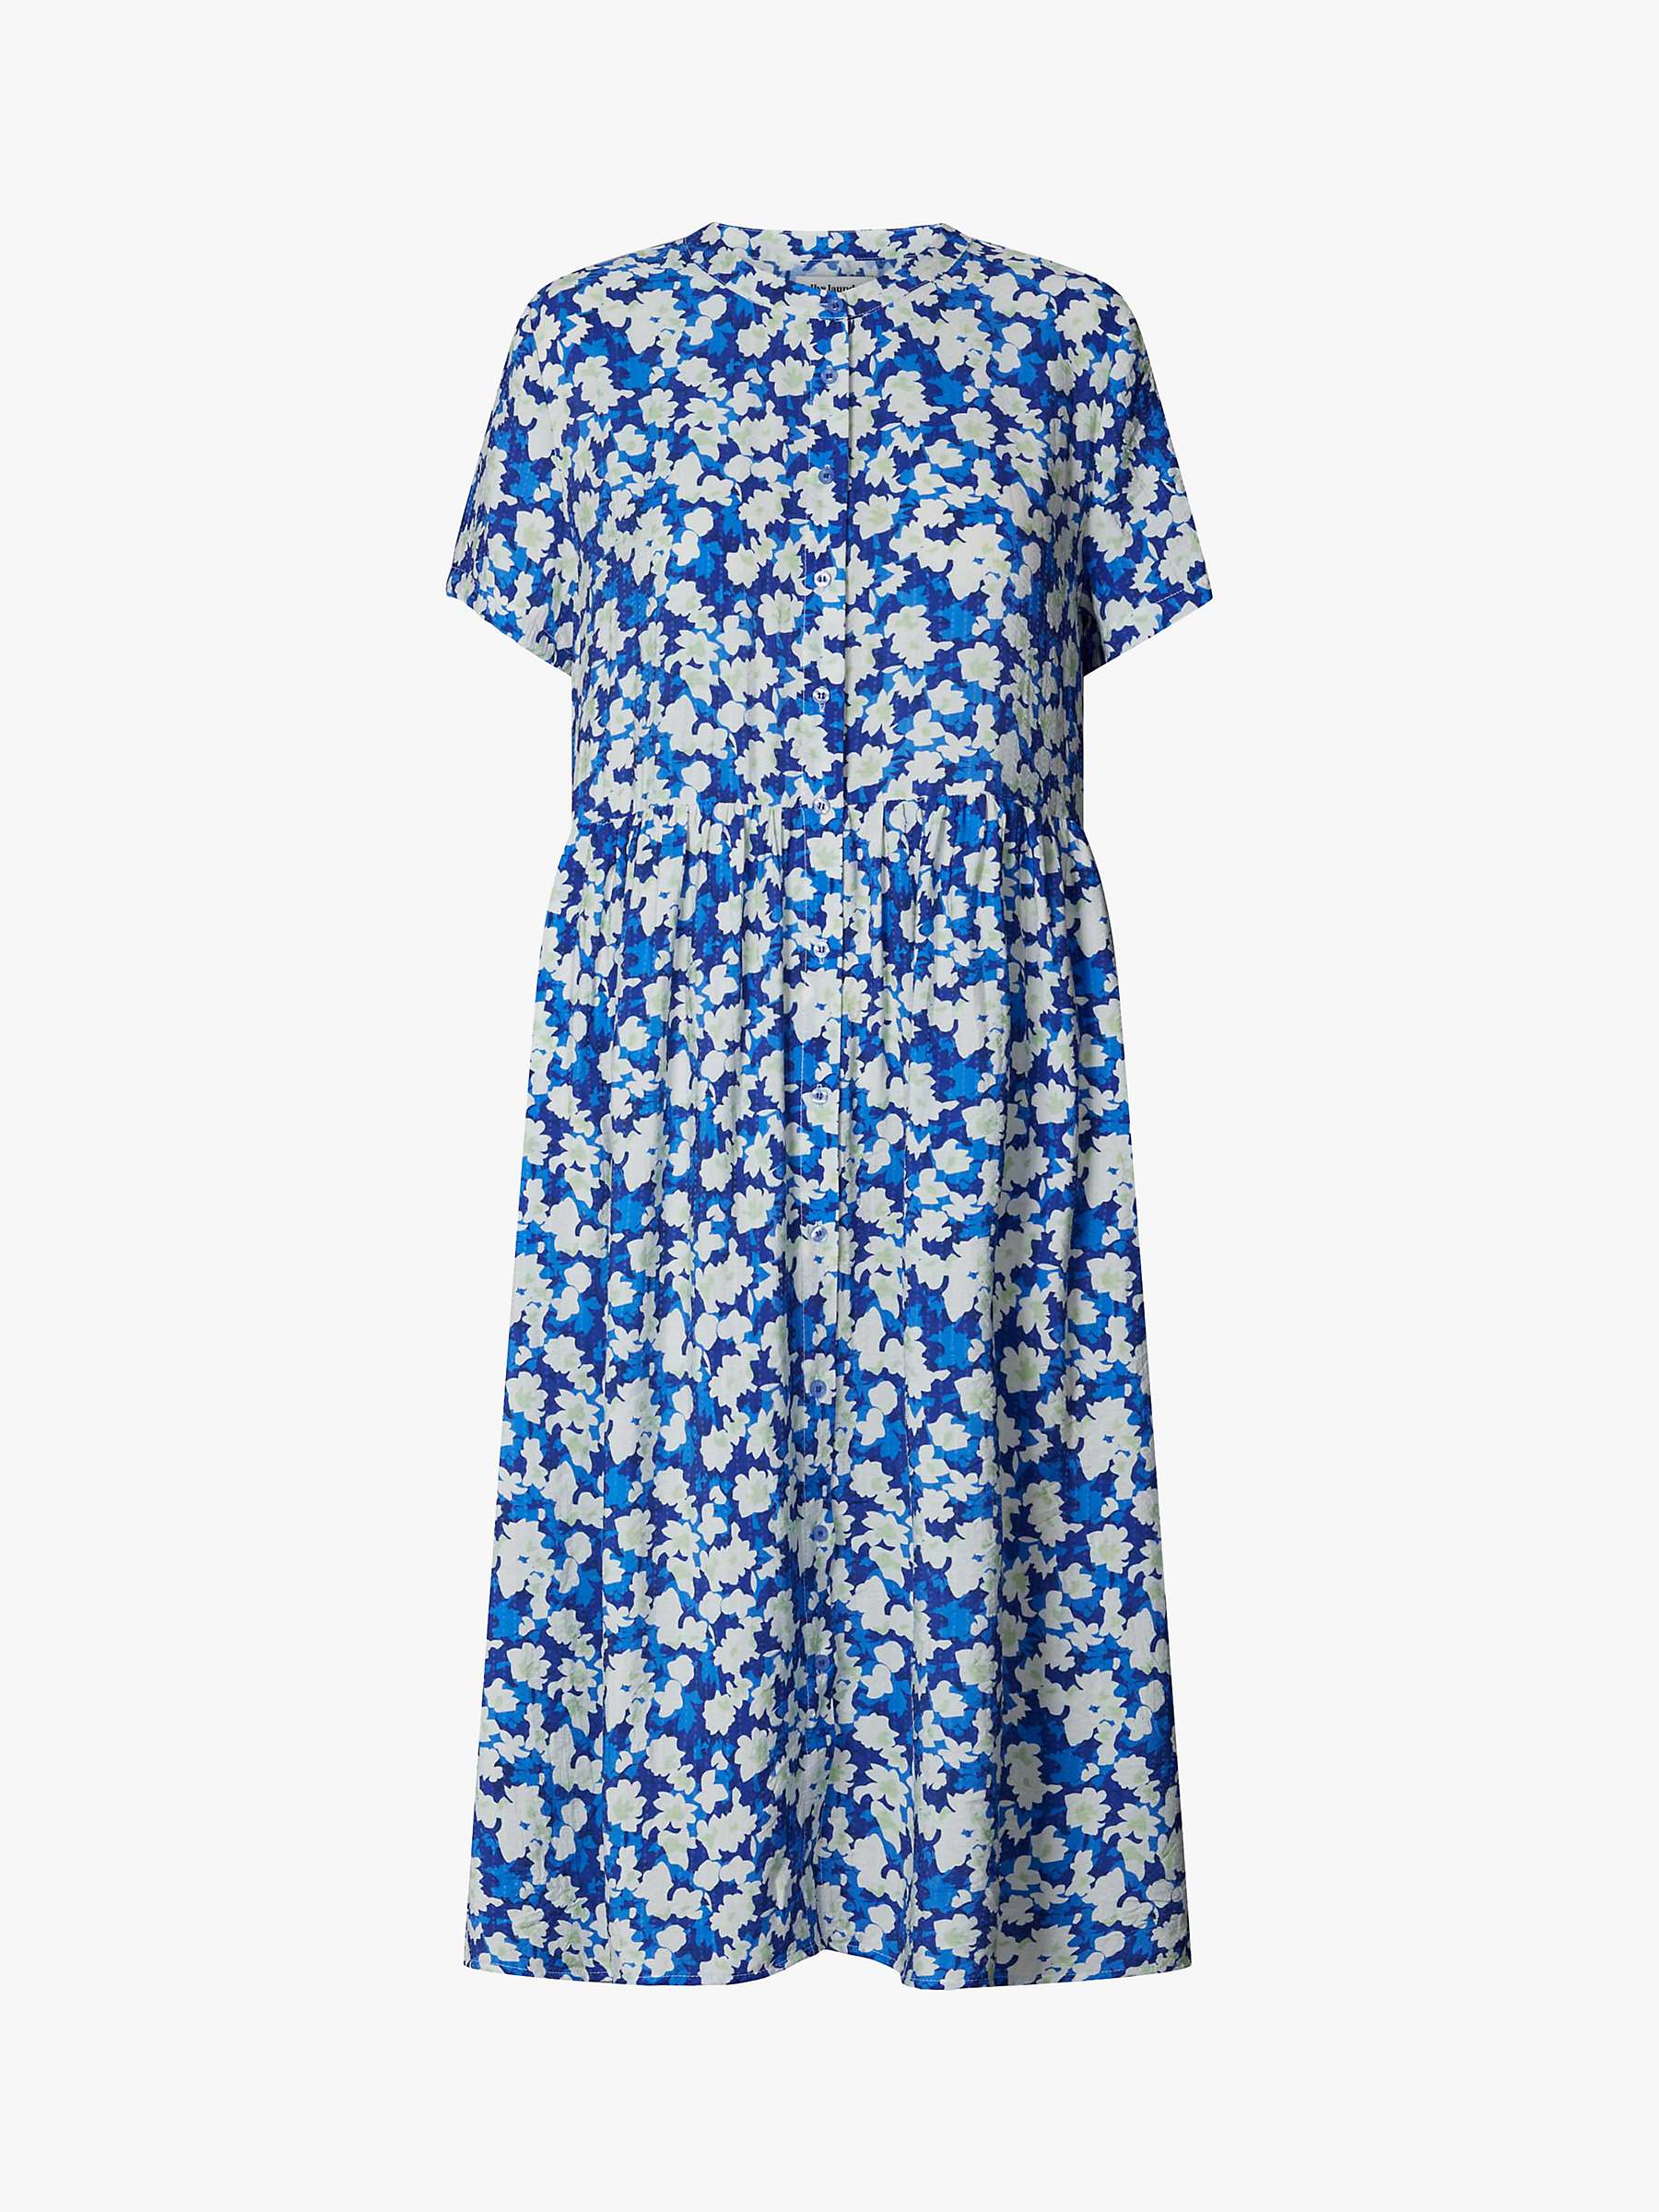 Lollys Laundry Aliya Flower Print Shirt Dress, Blue at John Lewis ...